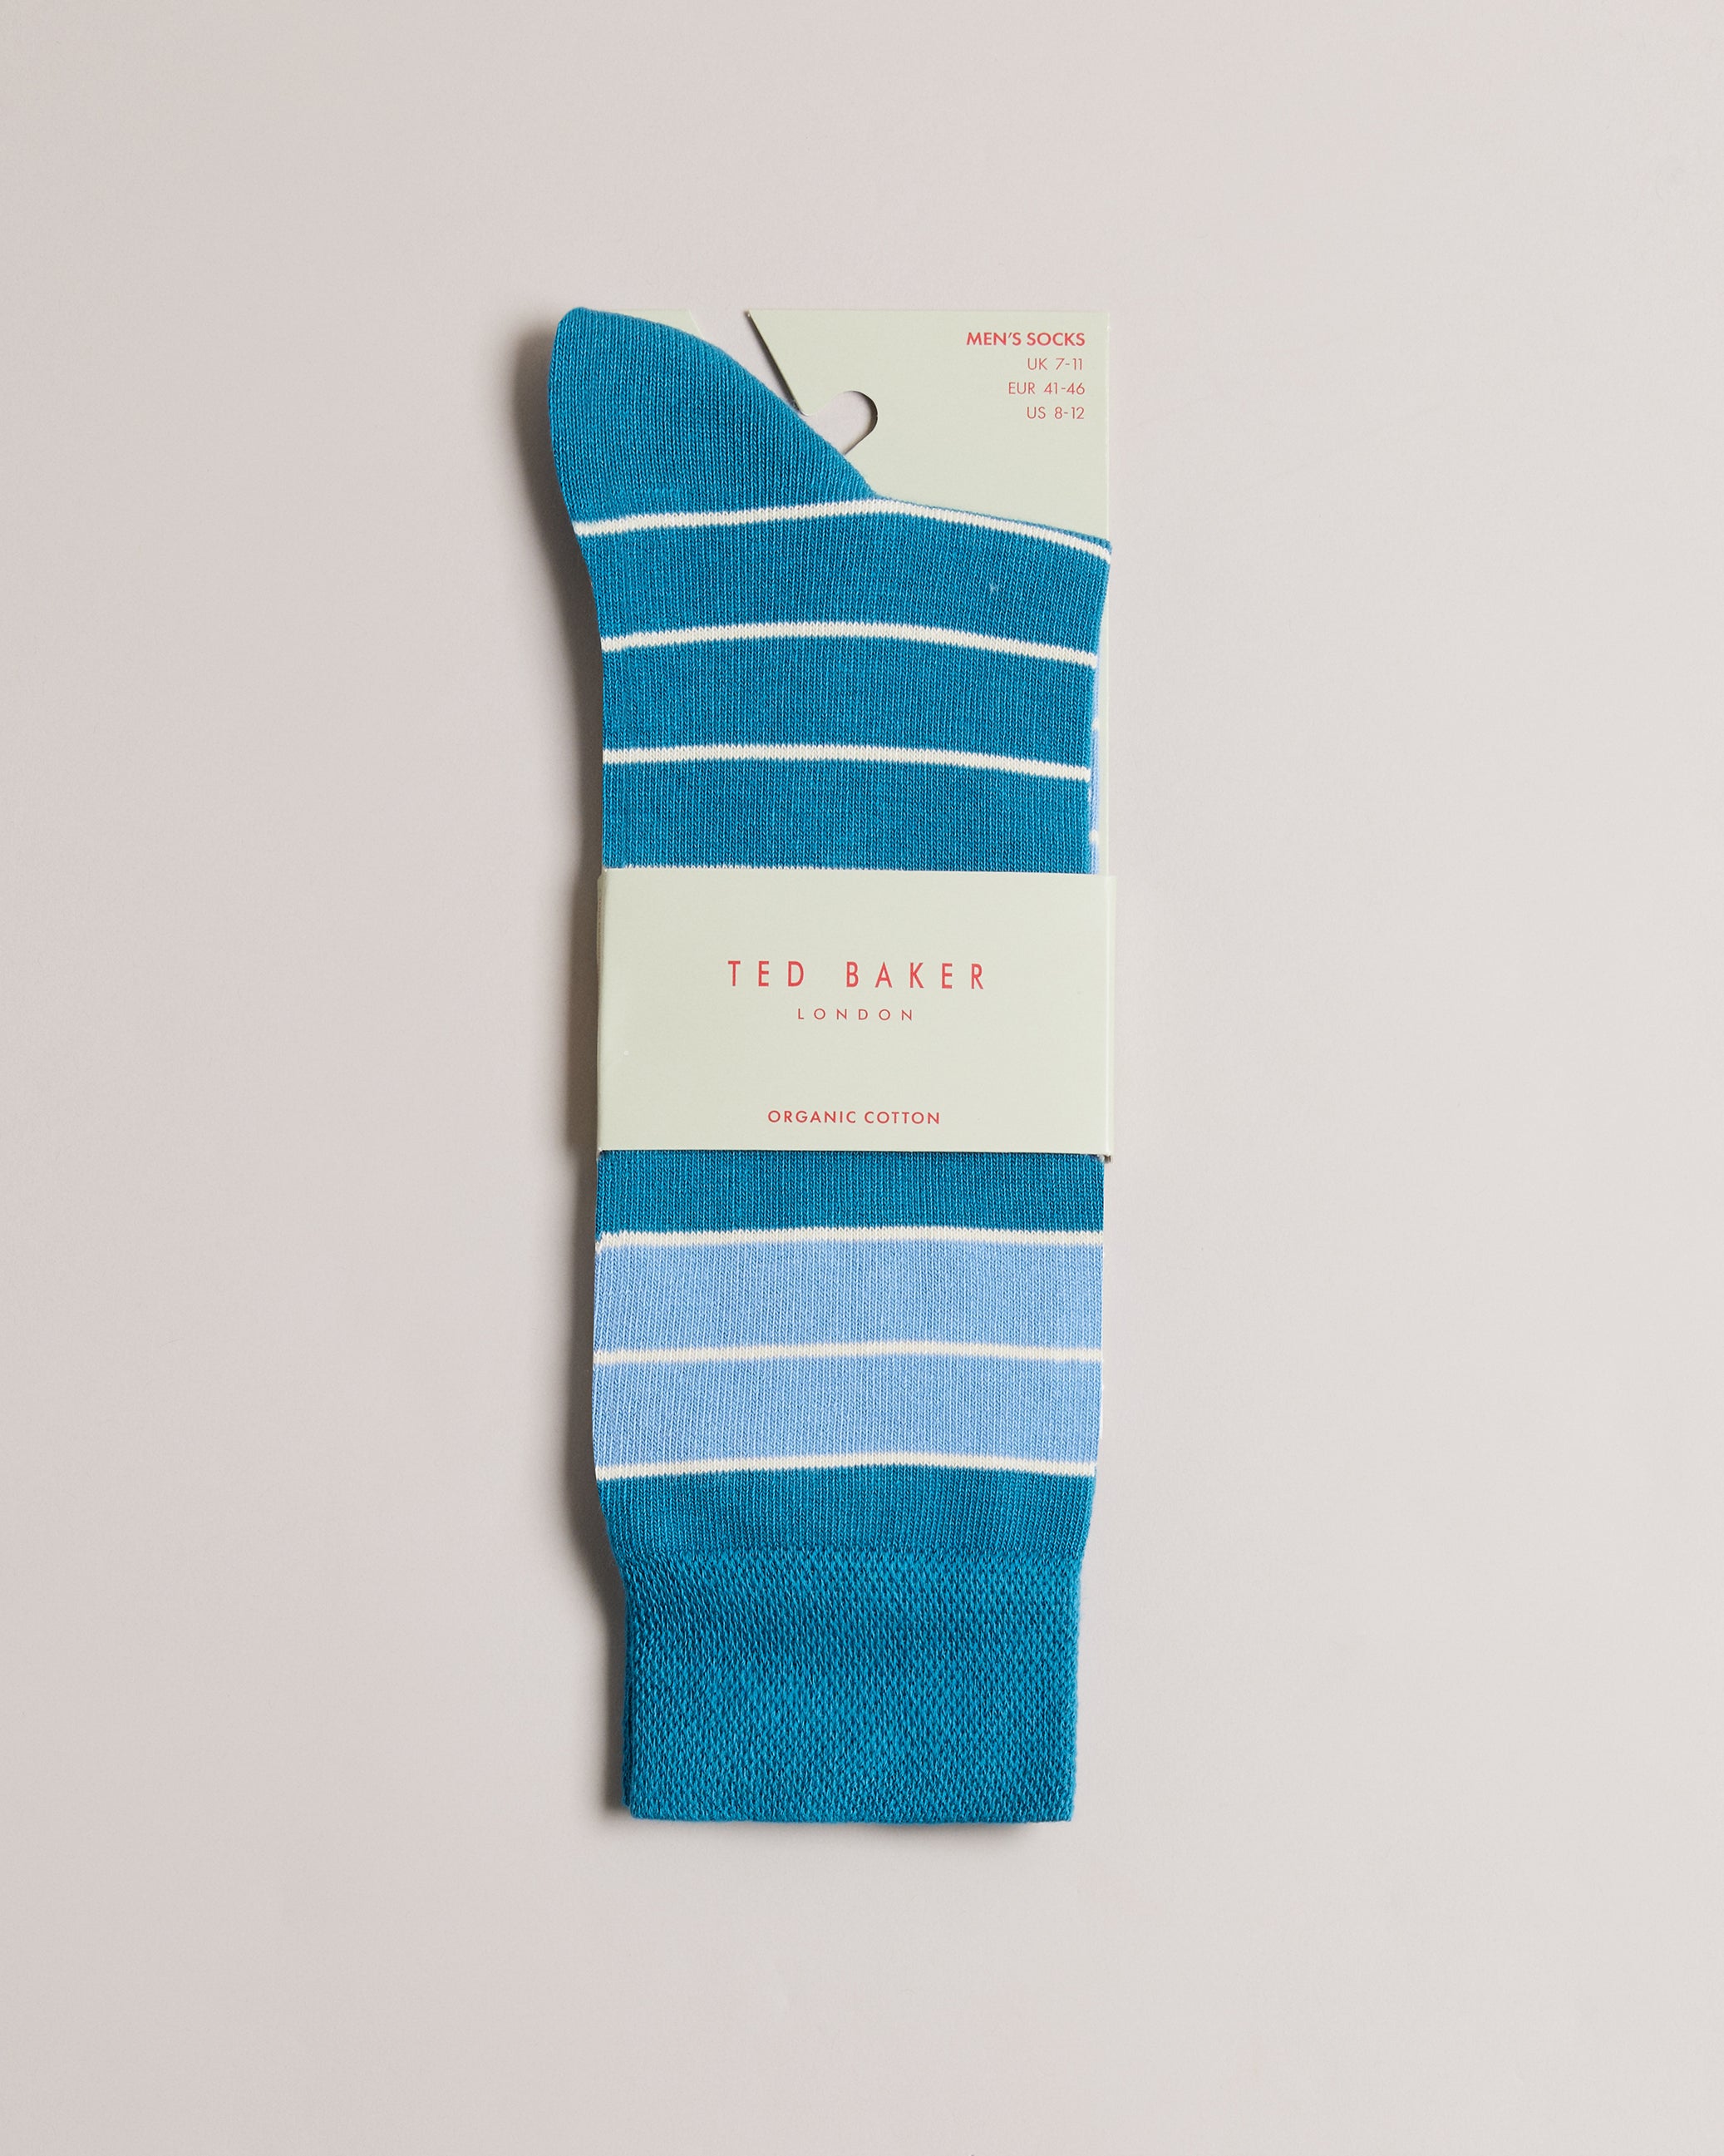 Ted Baker Socks - Size 7-11 - 3 Pairs in Presentation Gift Box - Originally  £25